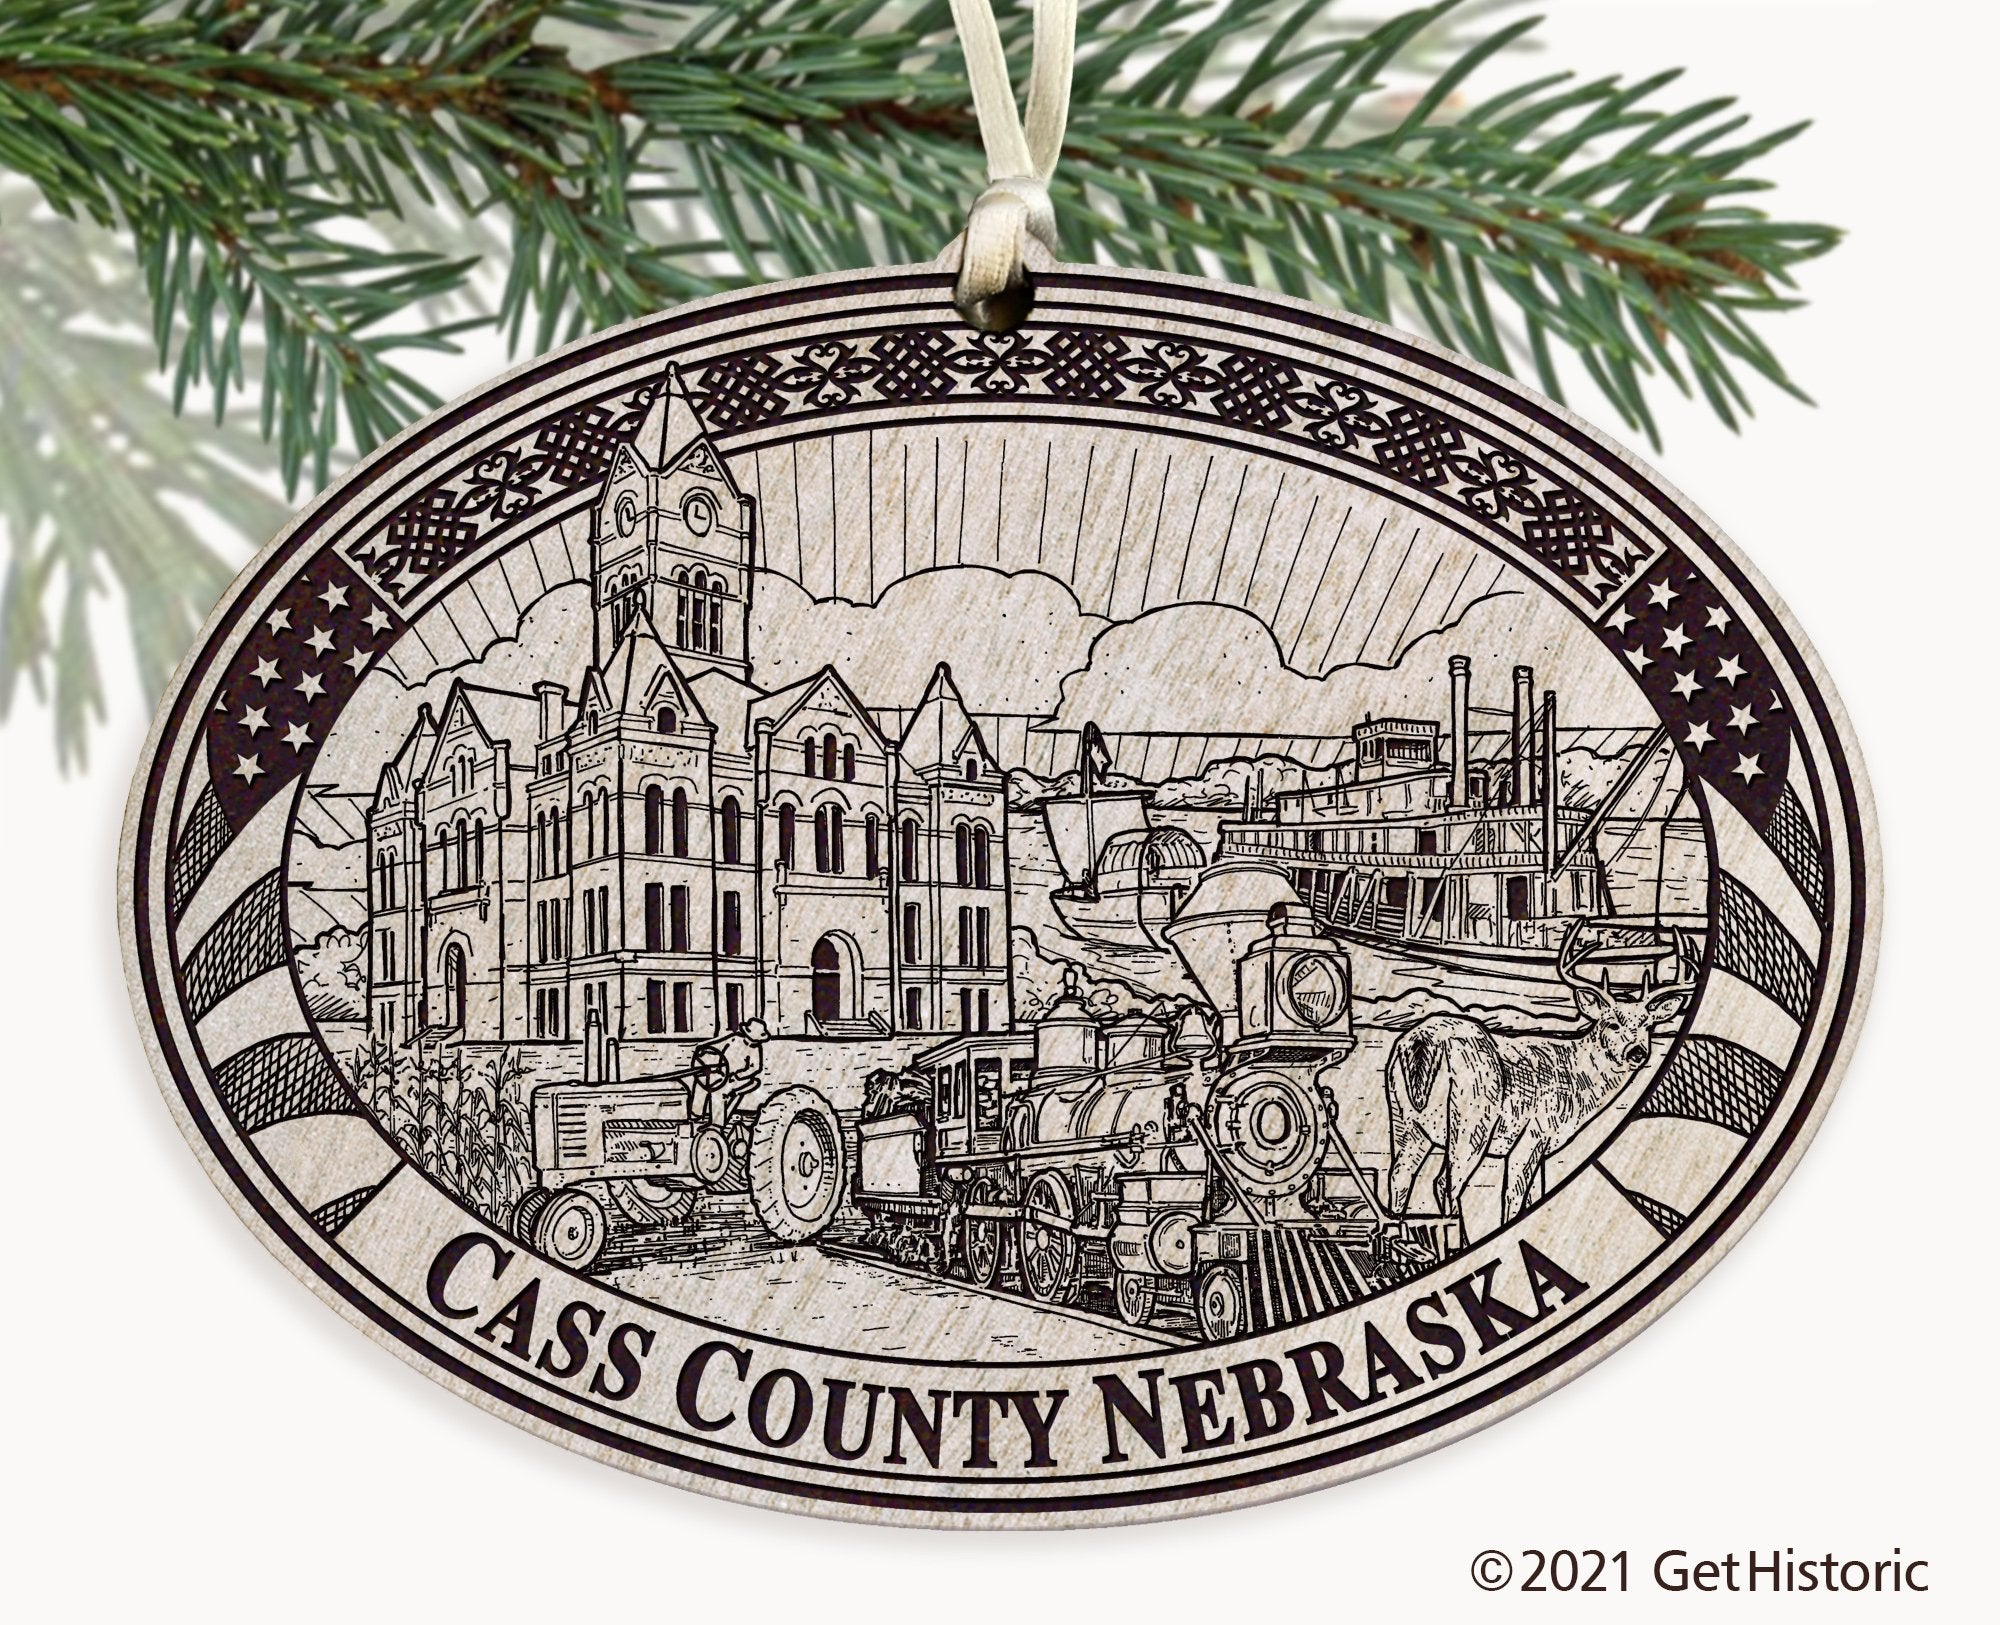 Cass County Nebraska Engraved Ornament